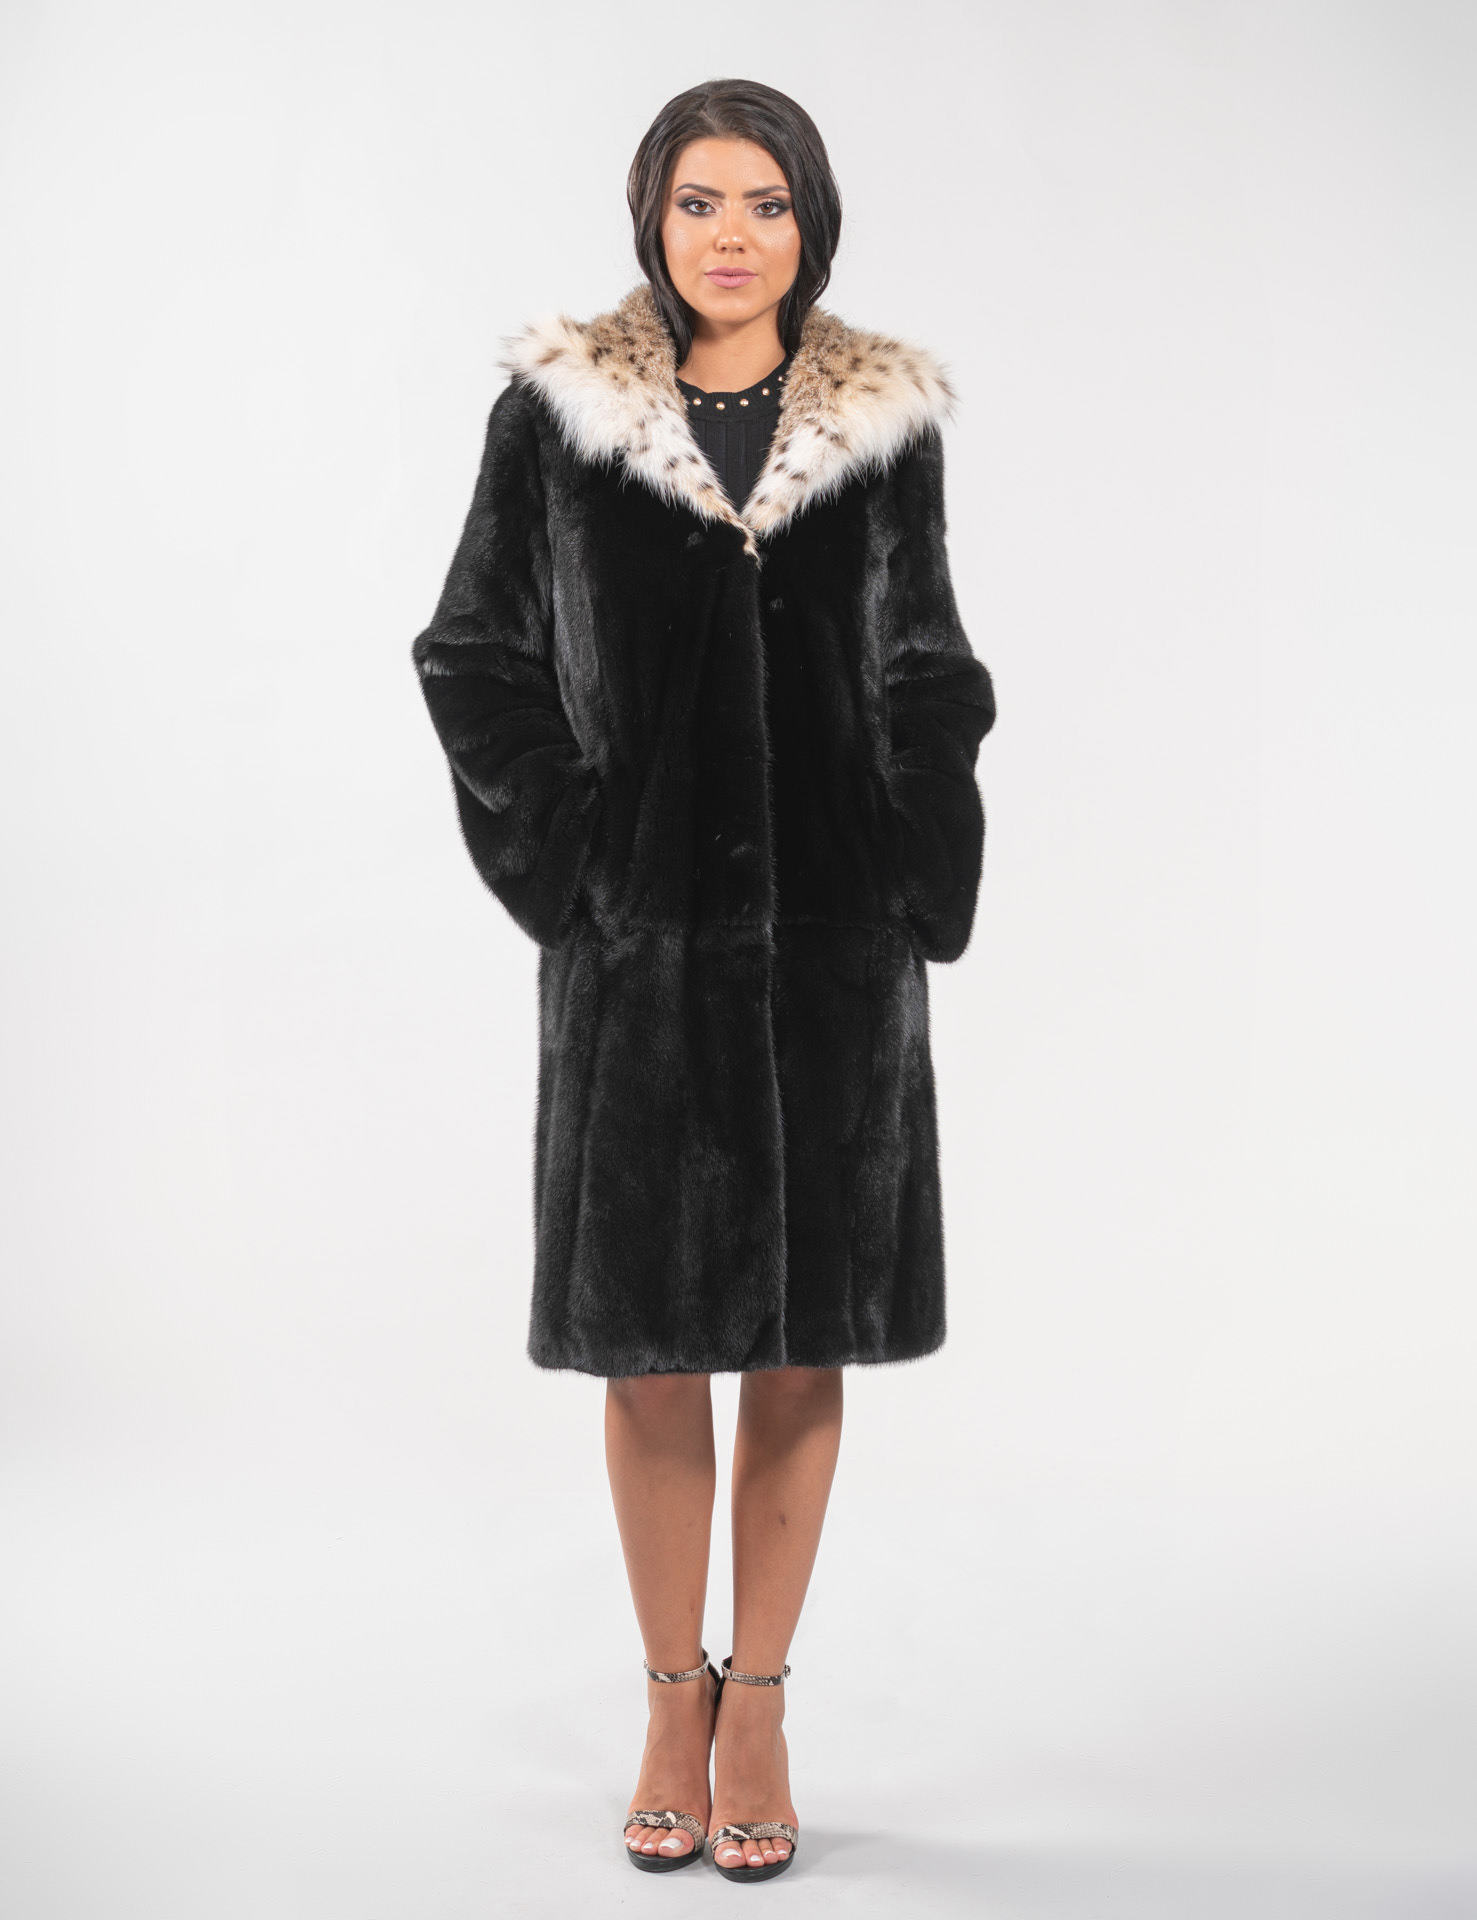 Short jacket in black mink fur horizontal 46 sleeve long hood outer pockets